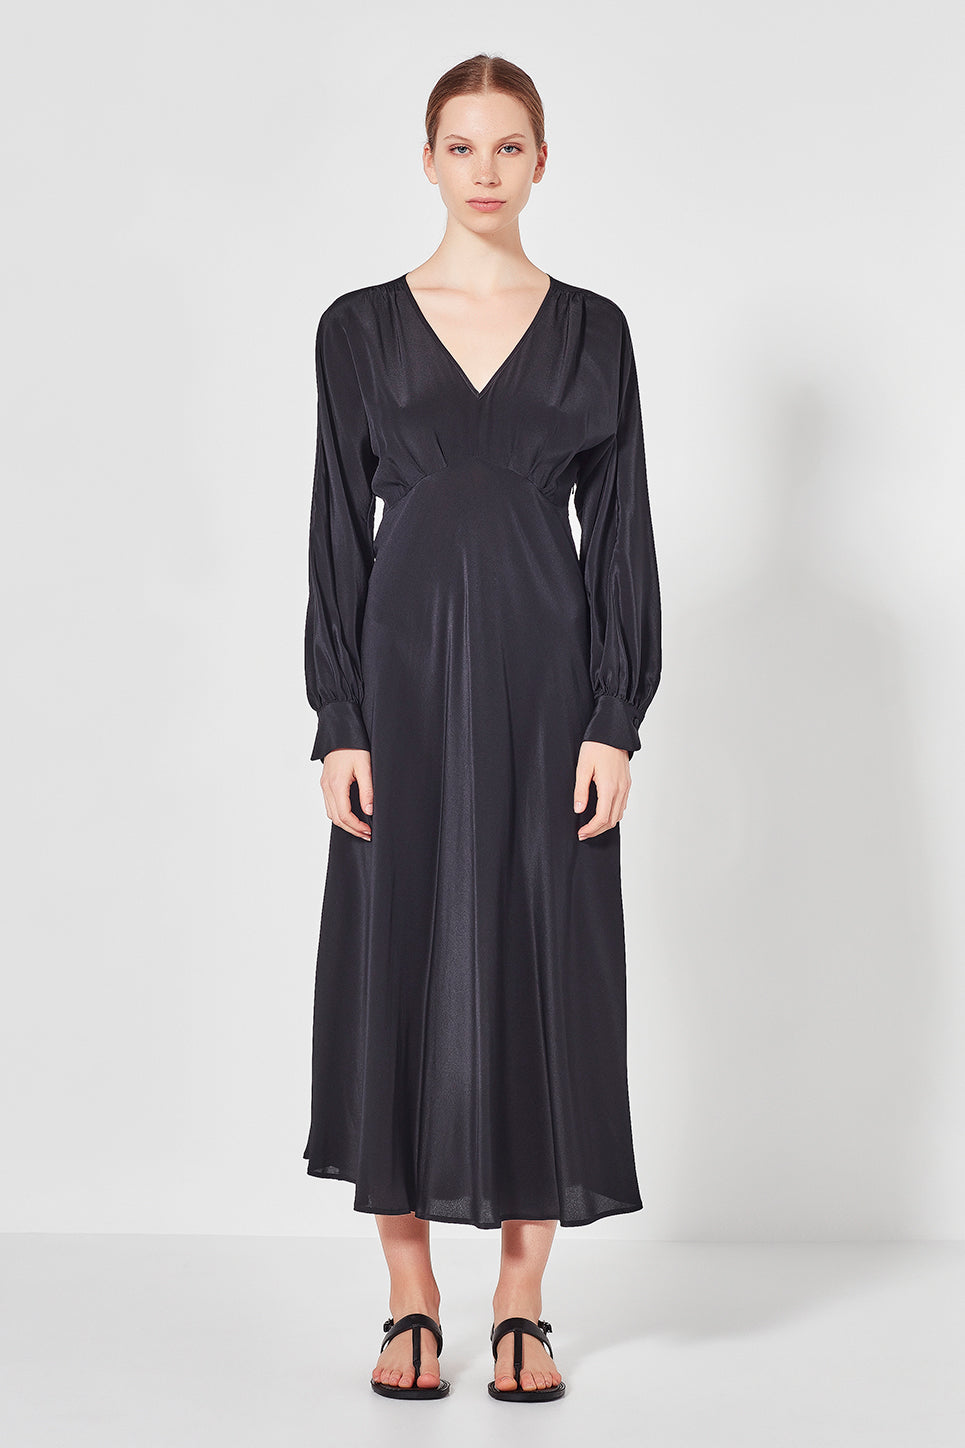 The Vionnet Dress in Black